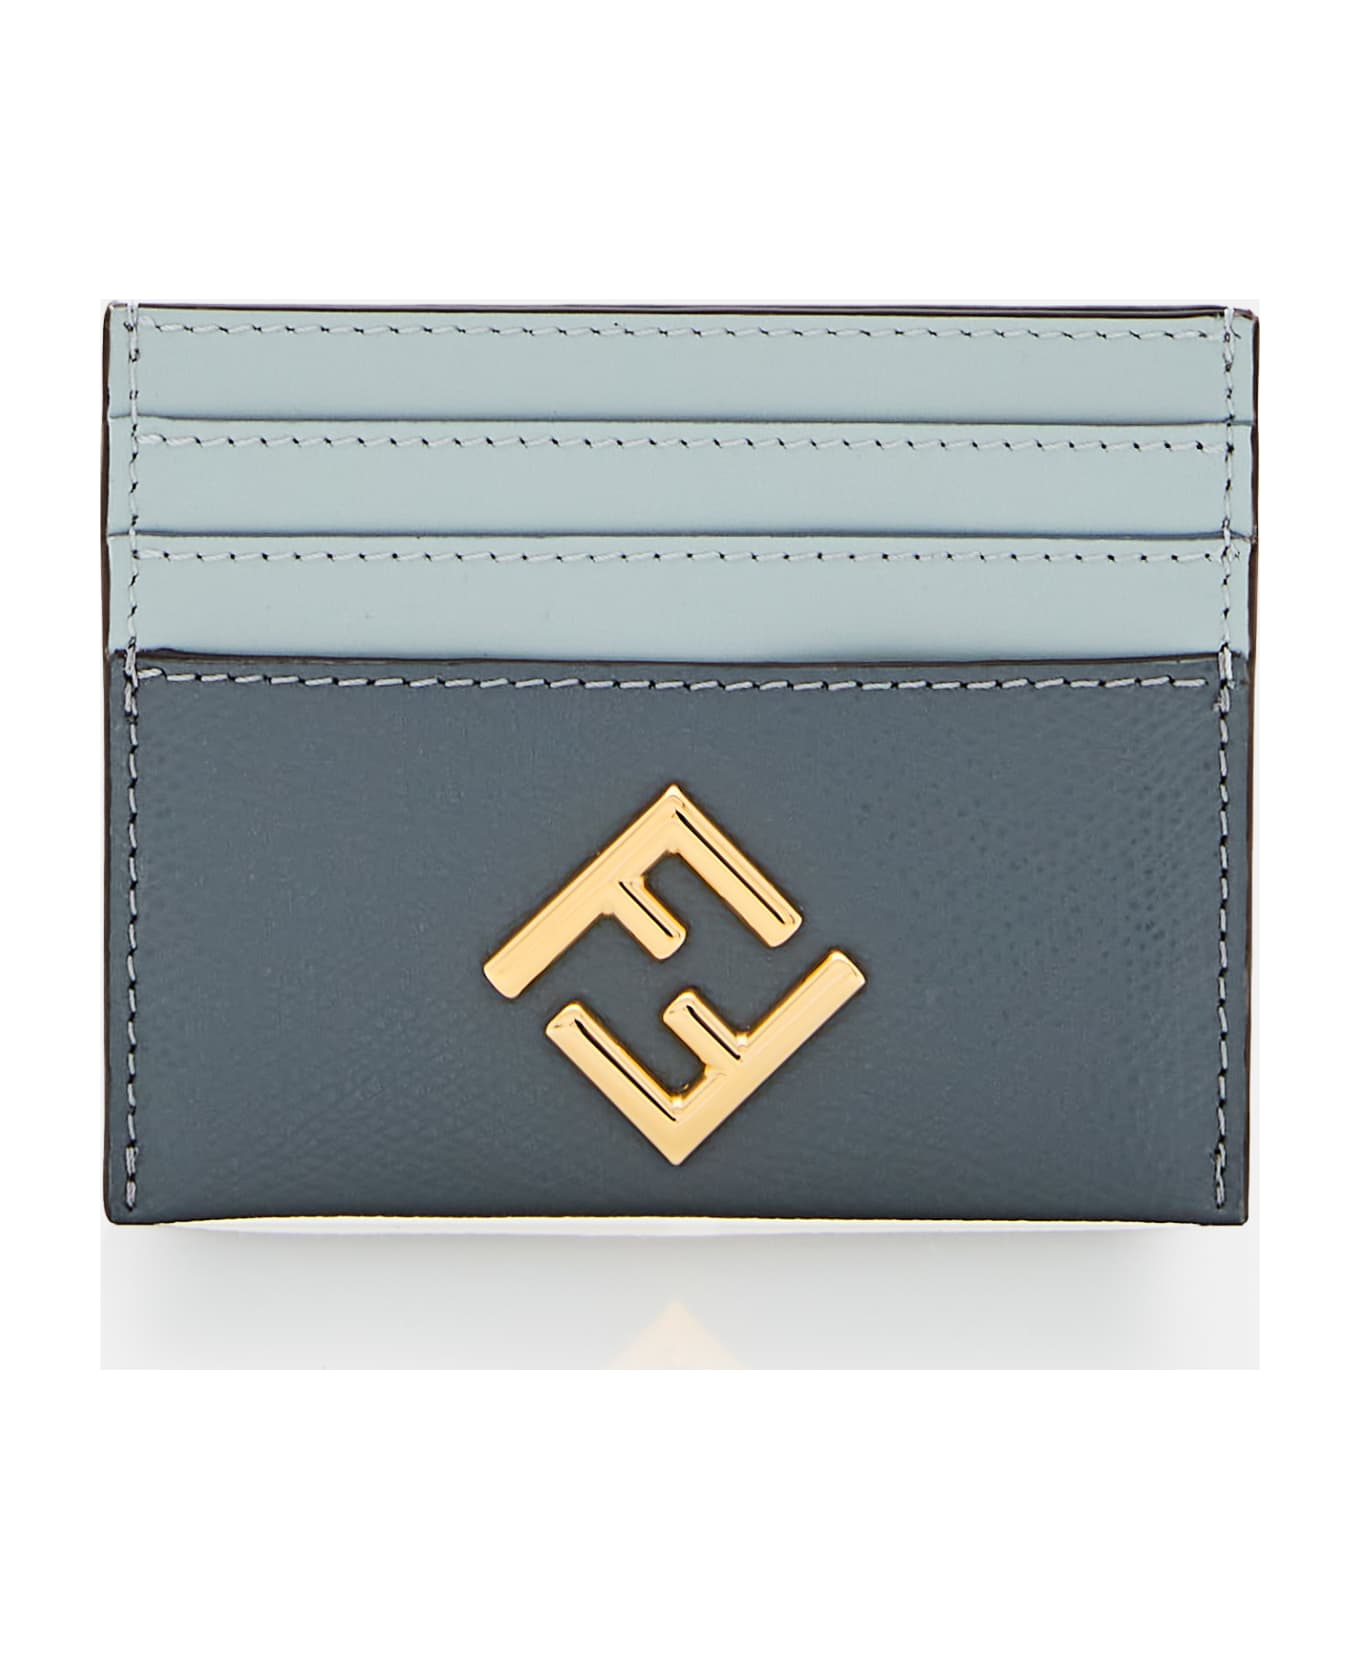 Fendi Leather Cardholder - Clear Blue